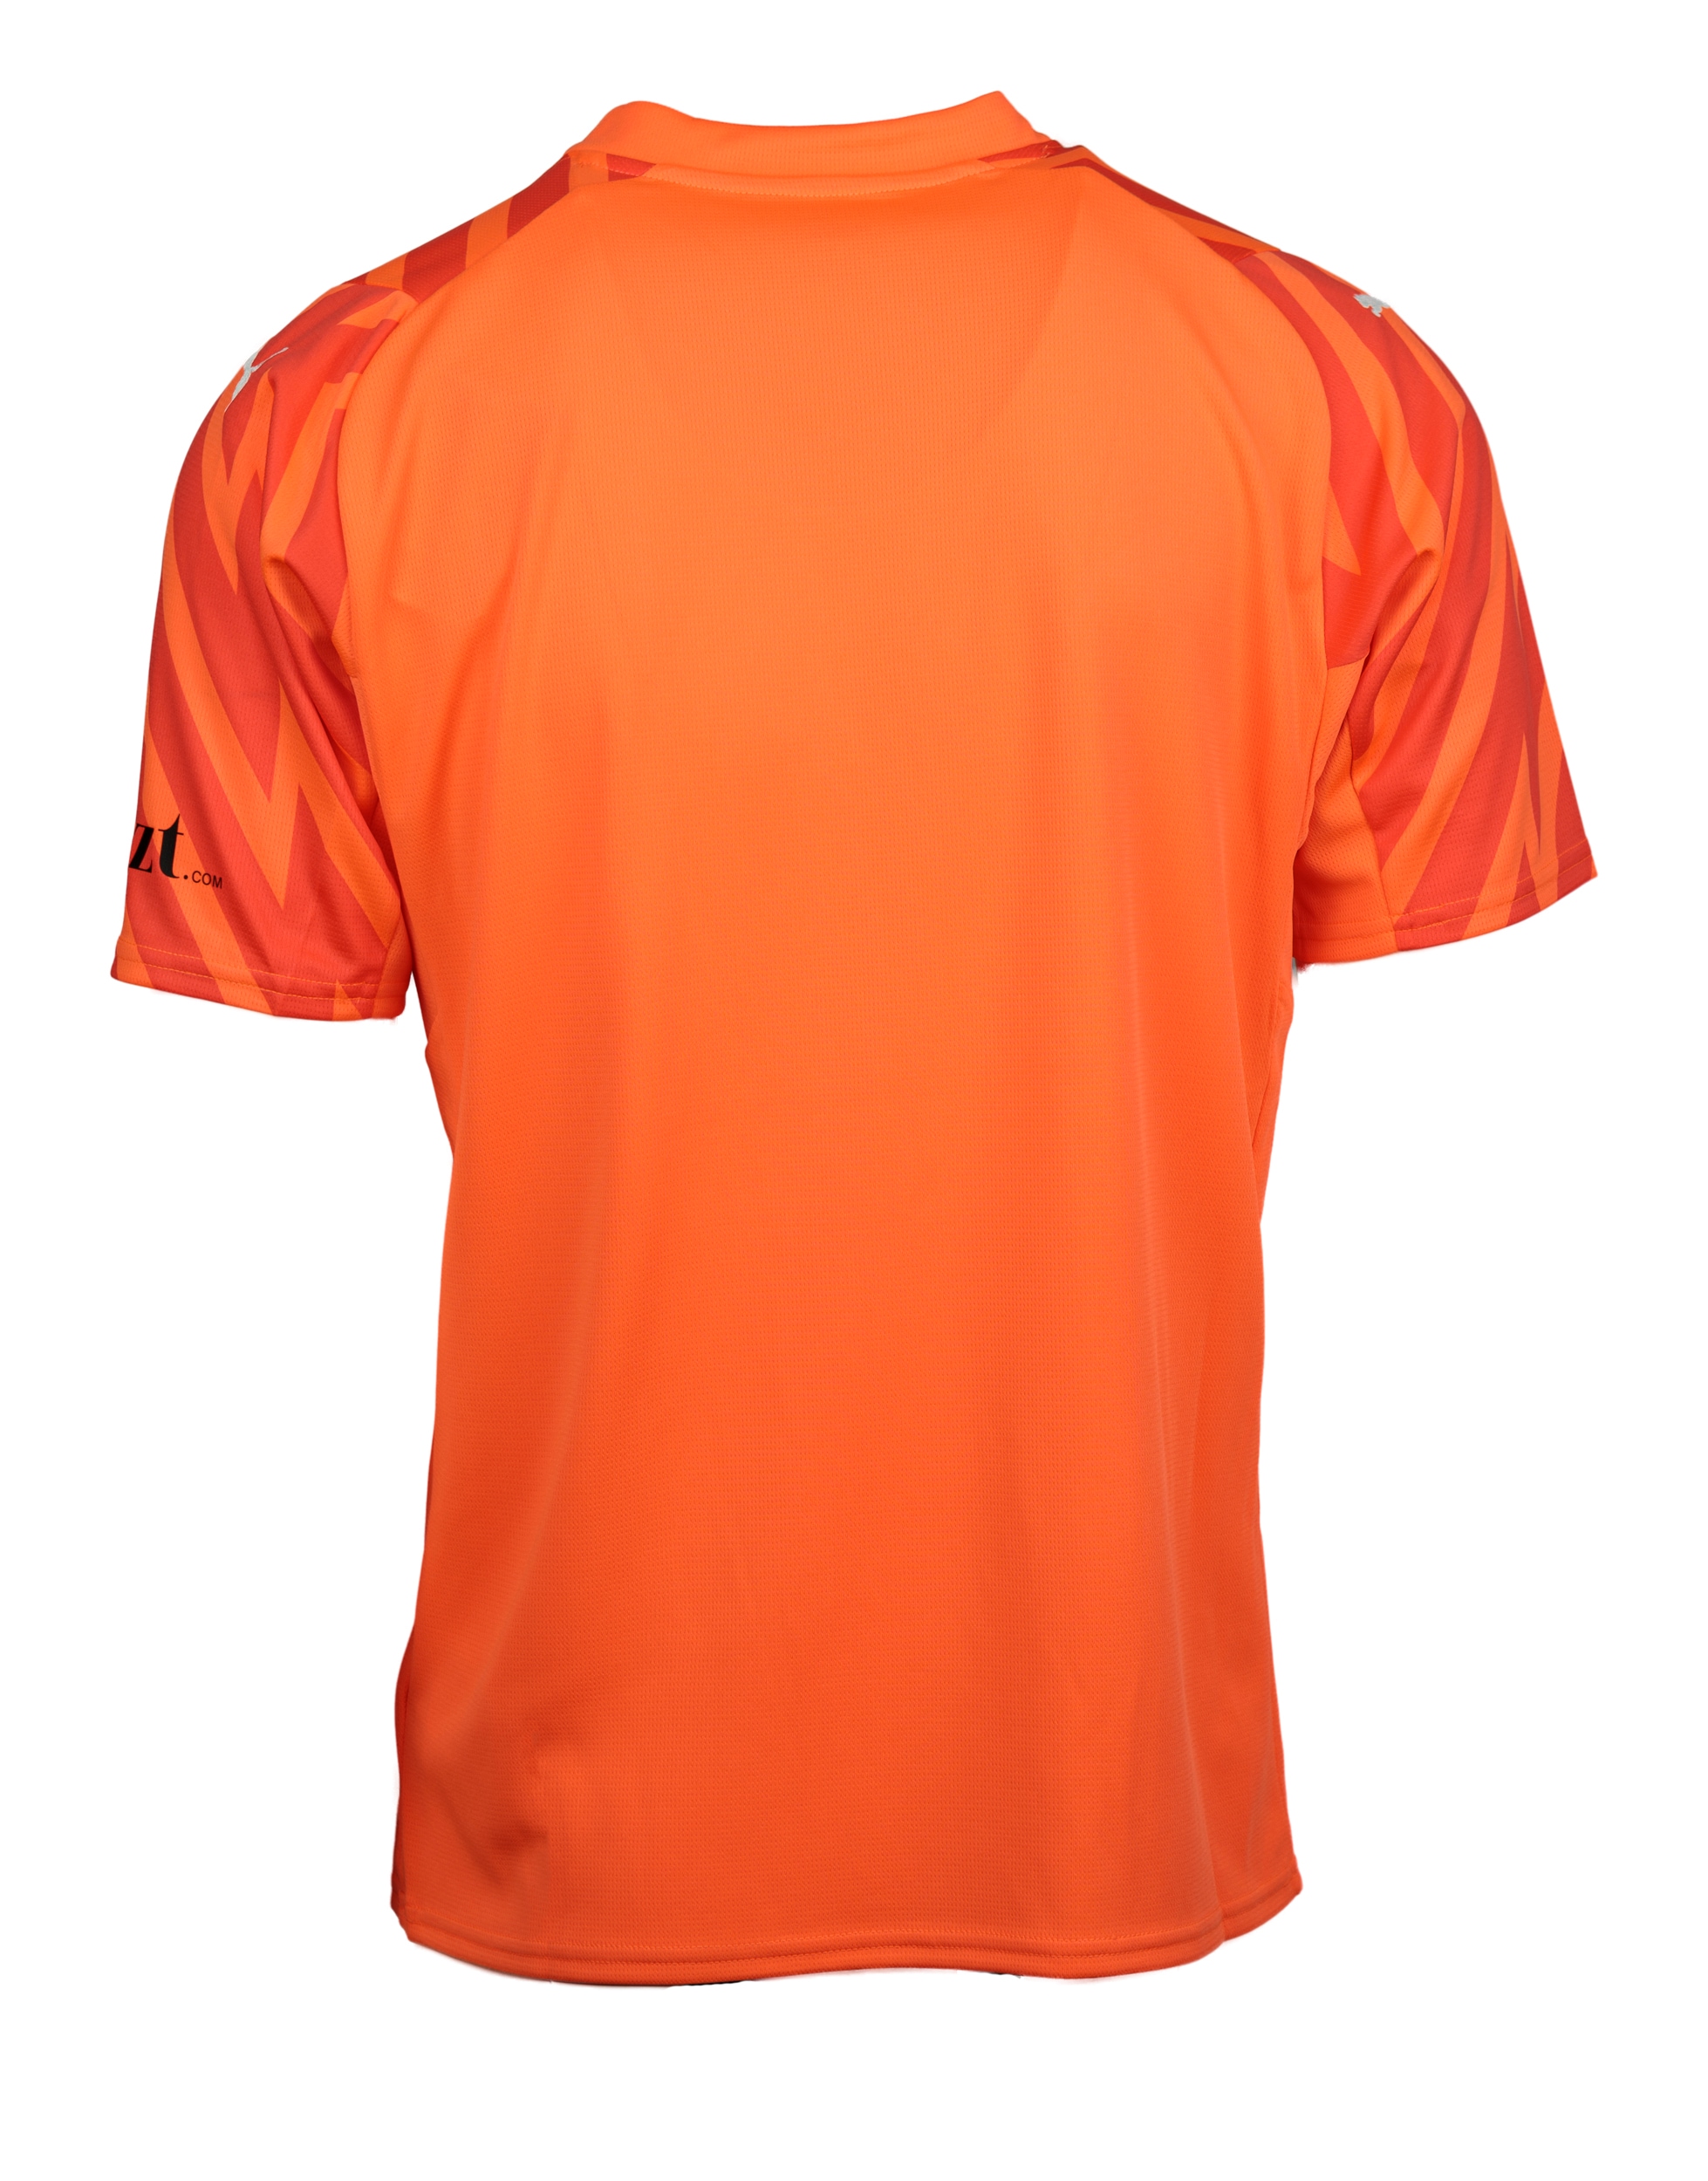 Puma Match GK Jersey Replica Jr orange